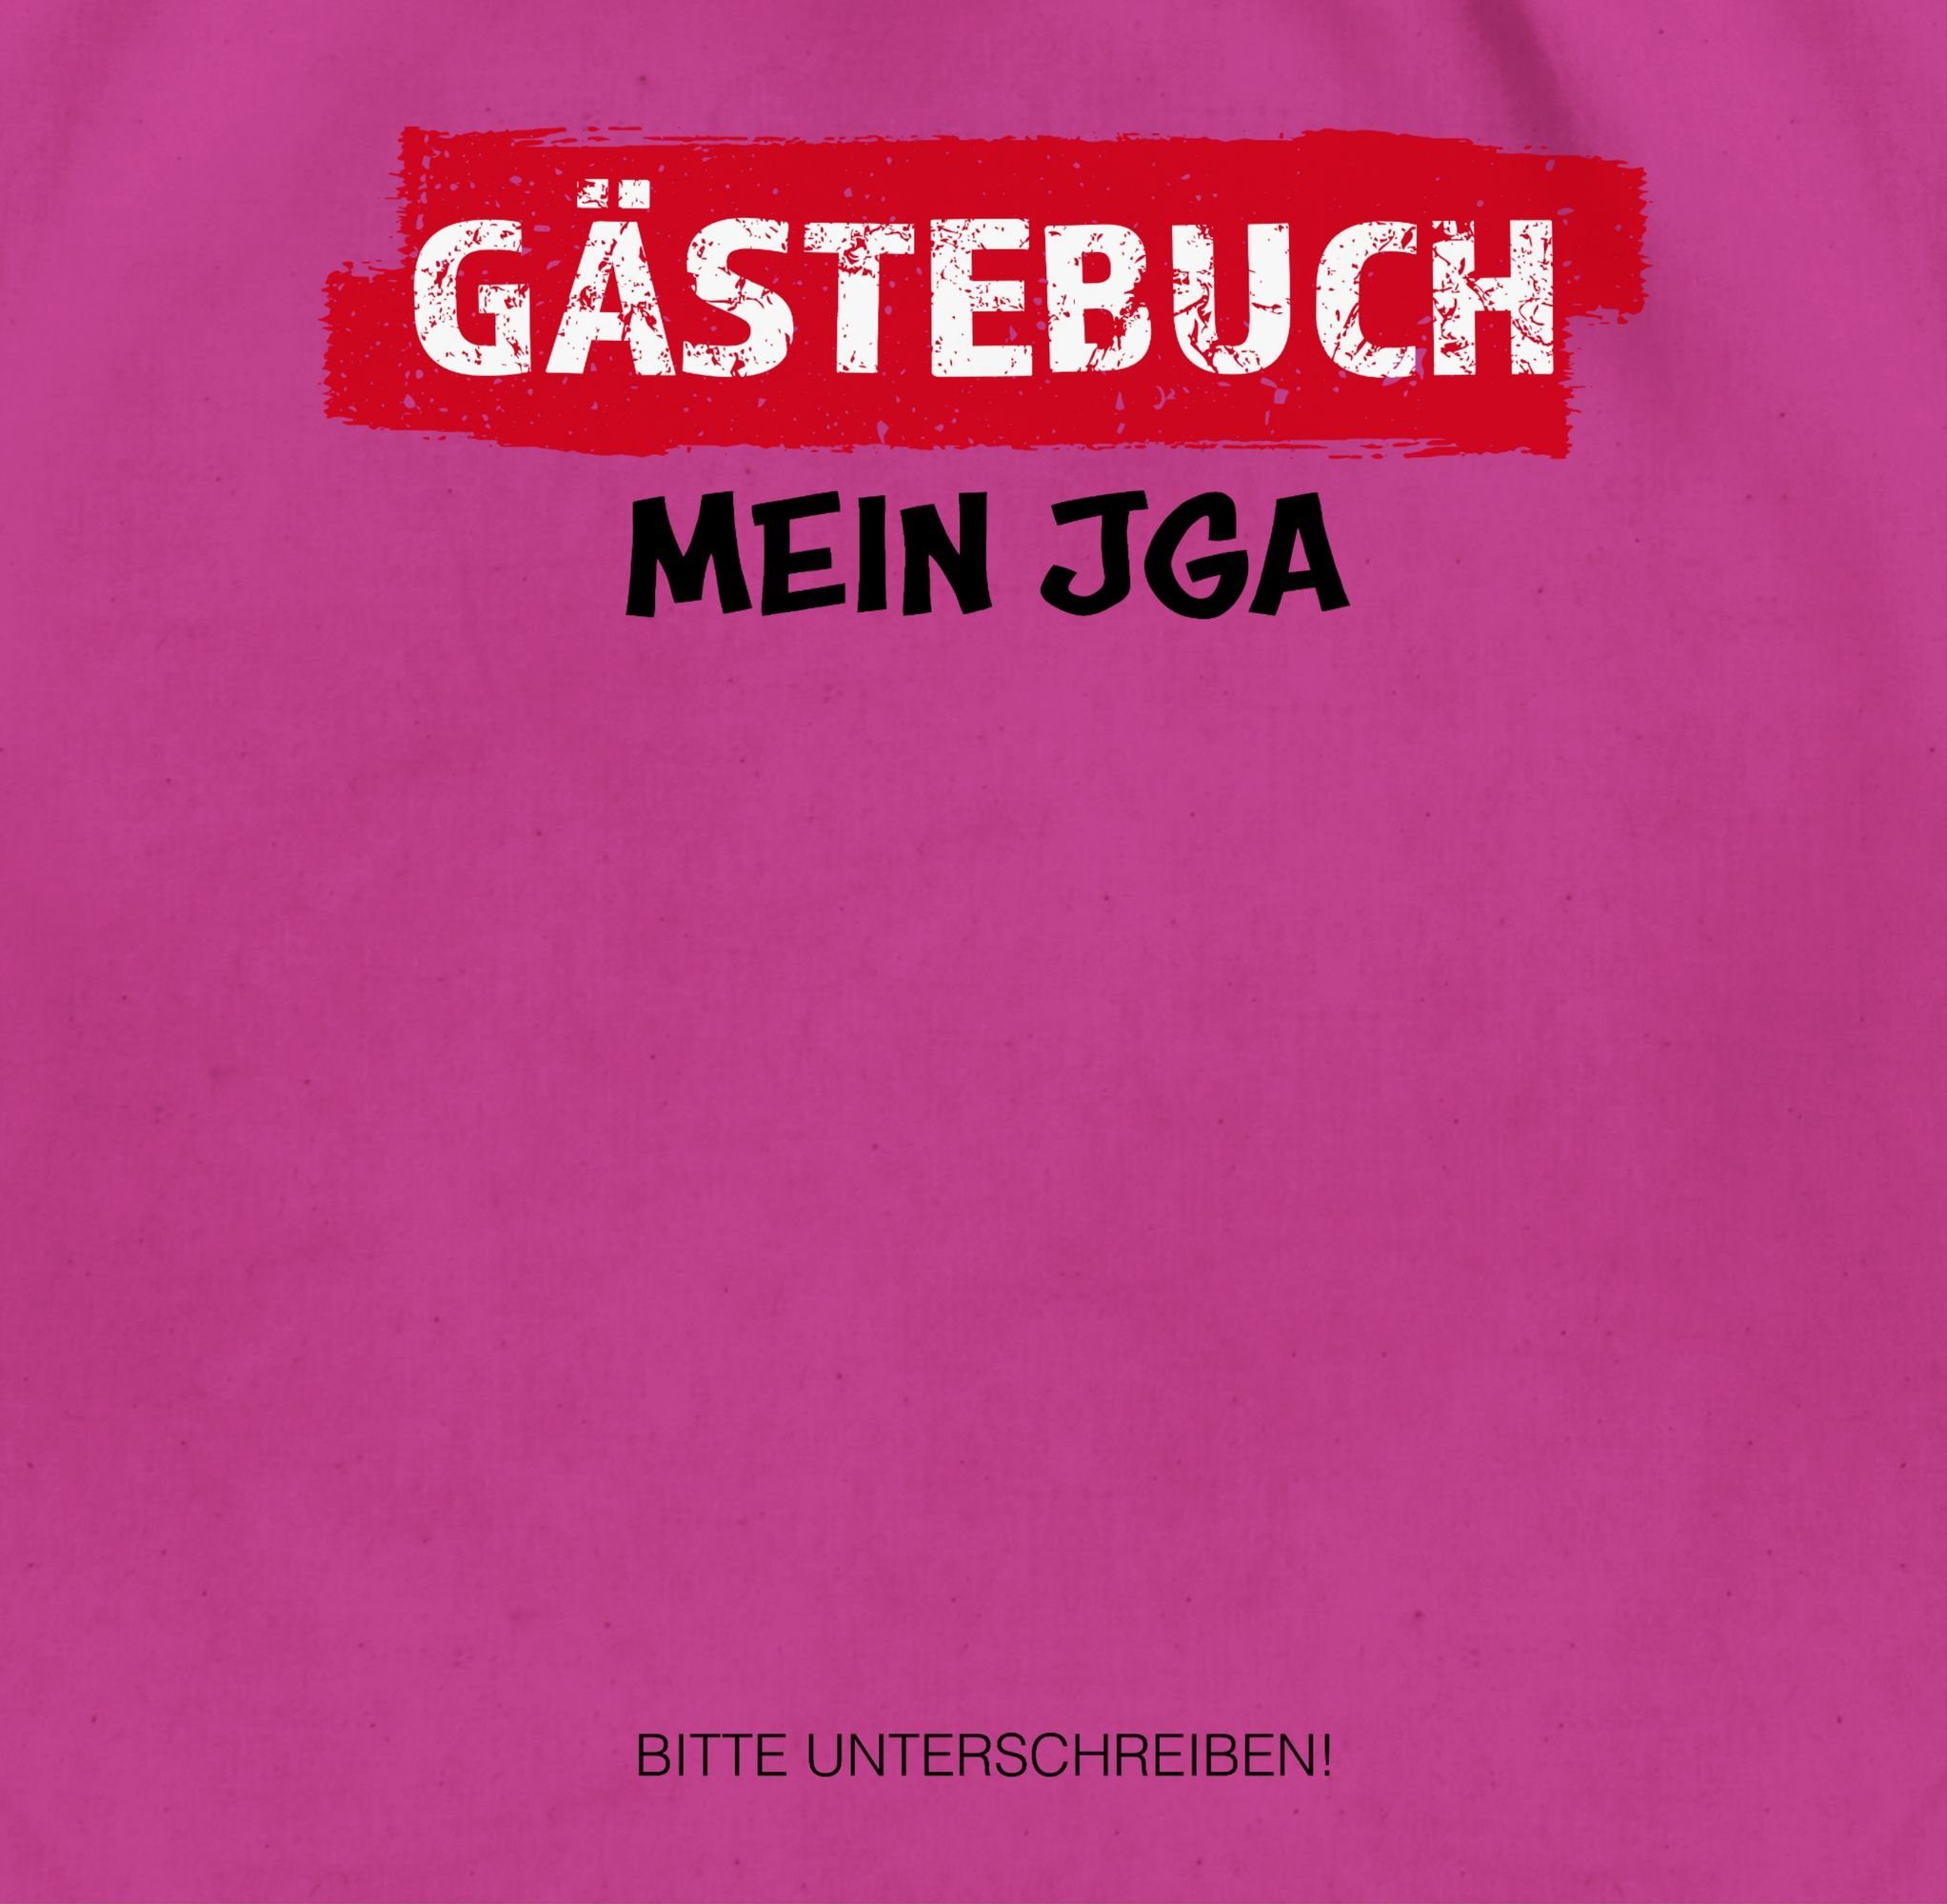 JGA 03 Unterschreiben Shirtracer Gäste, JGA Turnbeutel Männer I Fuchsia Gästebuch